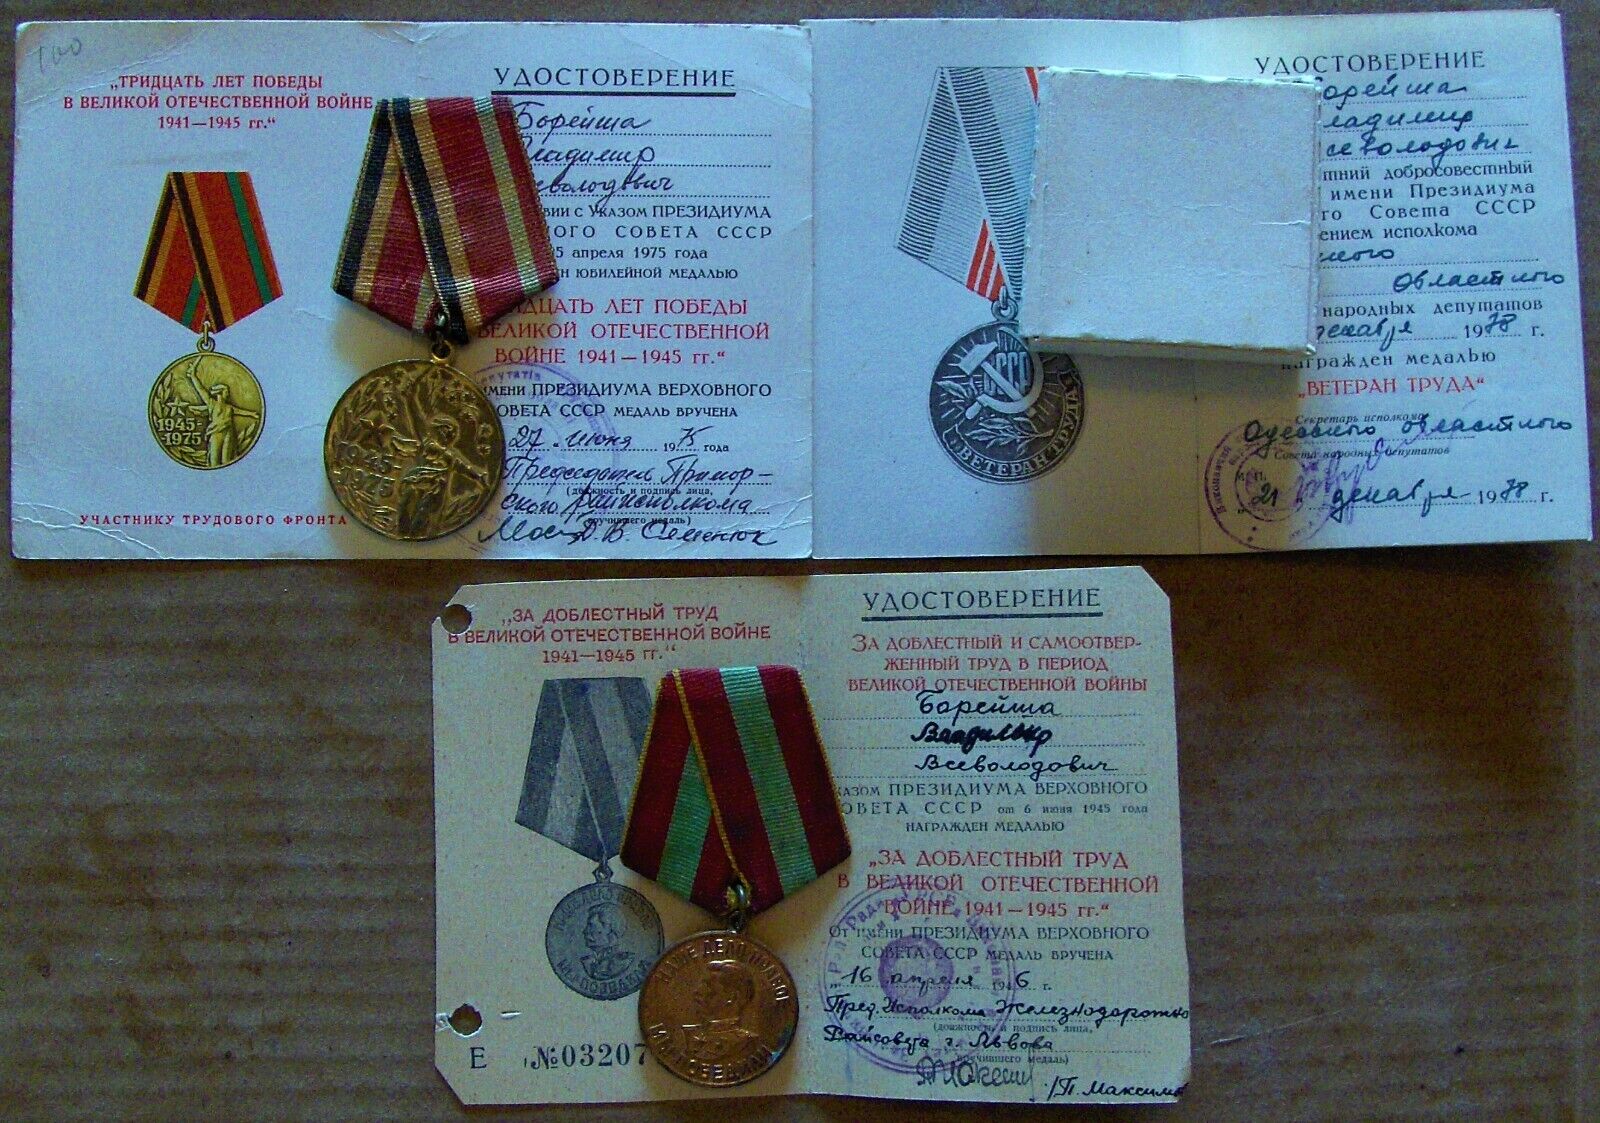 3 Russian/ Soviet medals to veteran of Labor Front WWII Borysha Vladimir